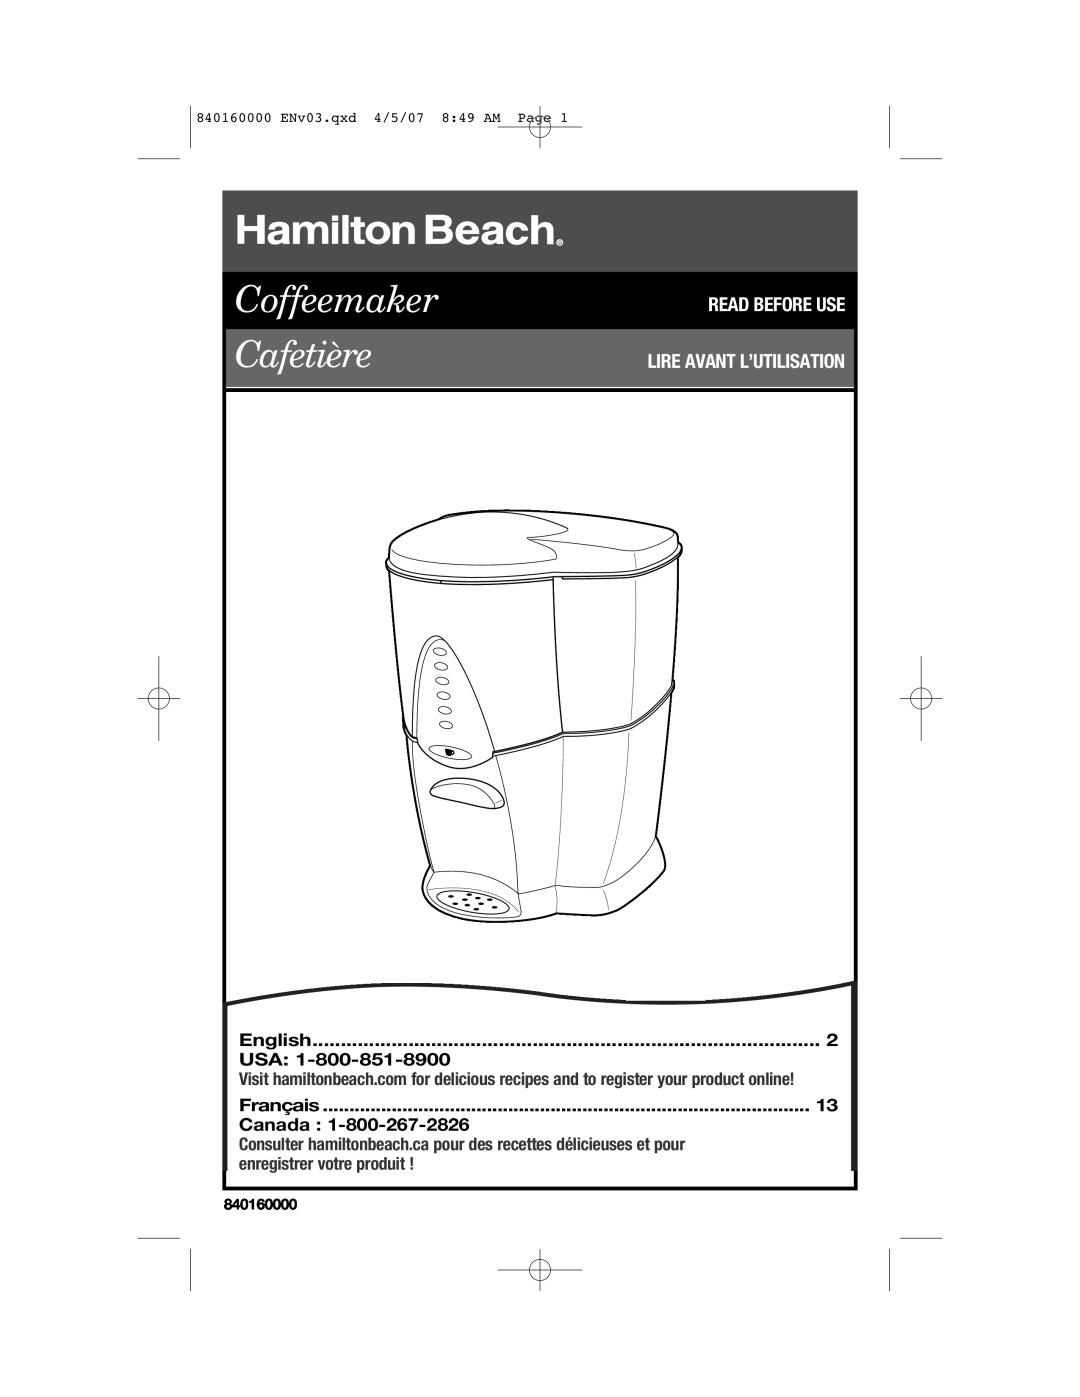 Hamilton Beach D43012B manual English, Français, Canada, Coffeemaker Cafetière, Read Before Use Lire Avant L’Utilisation 